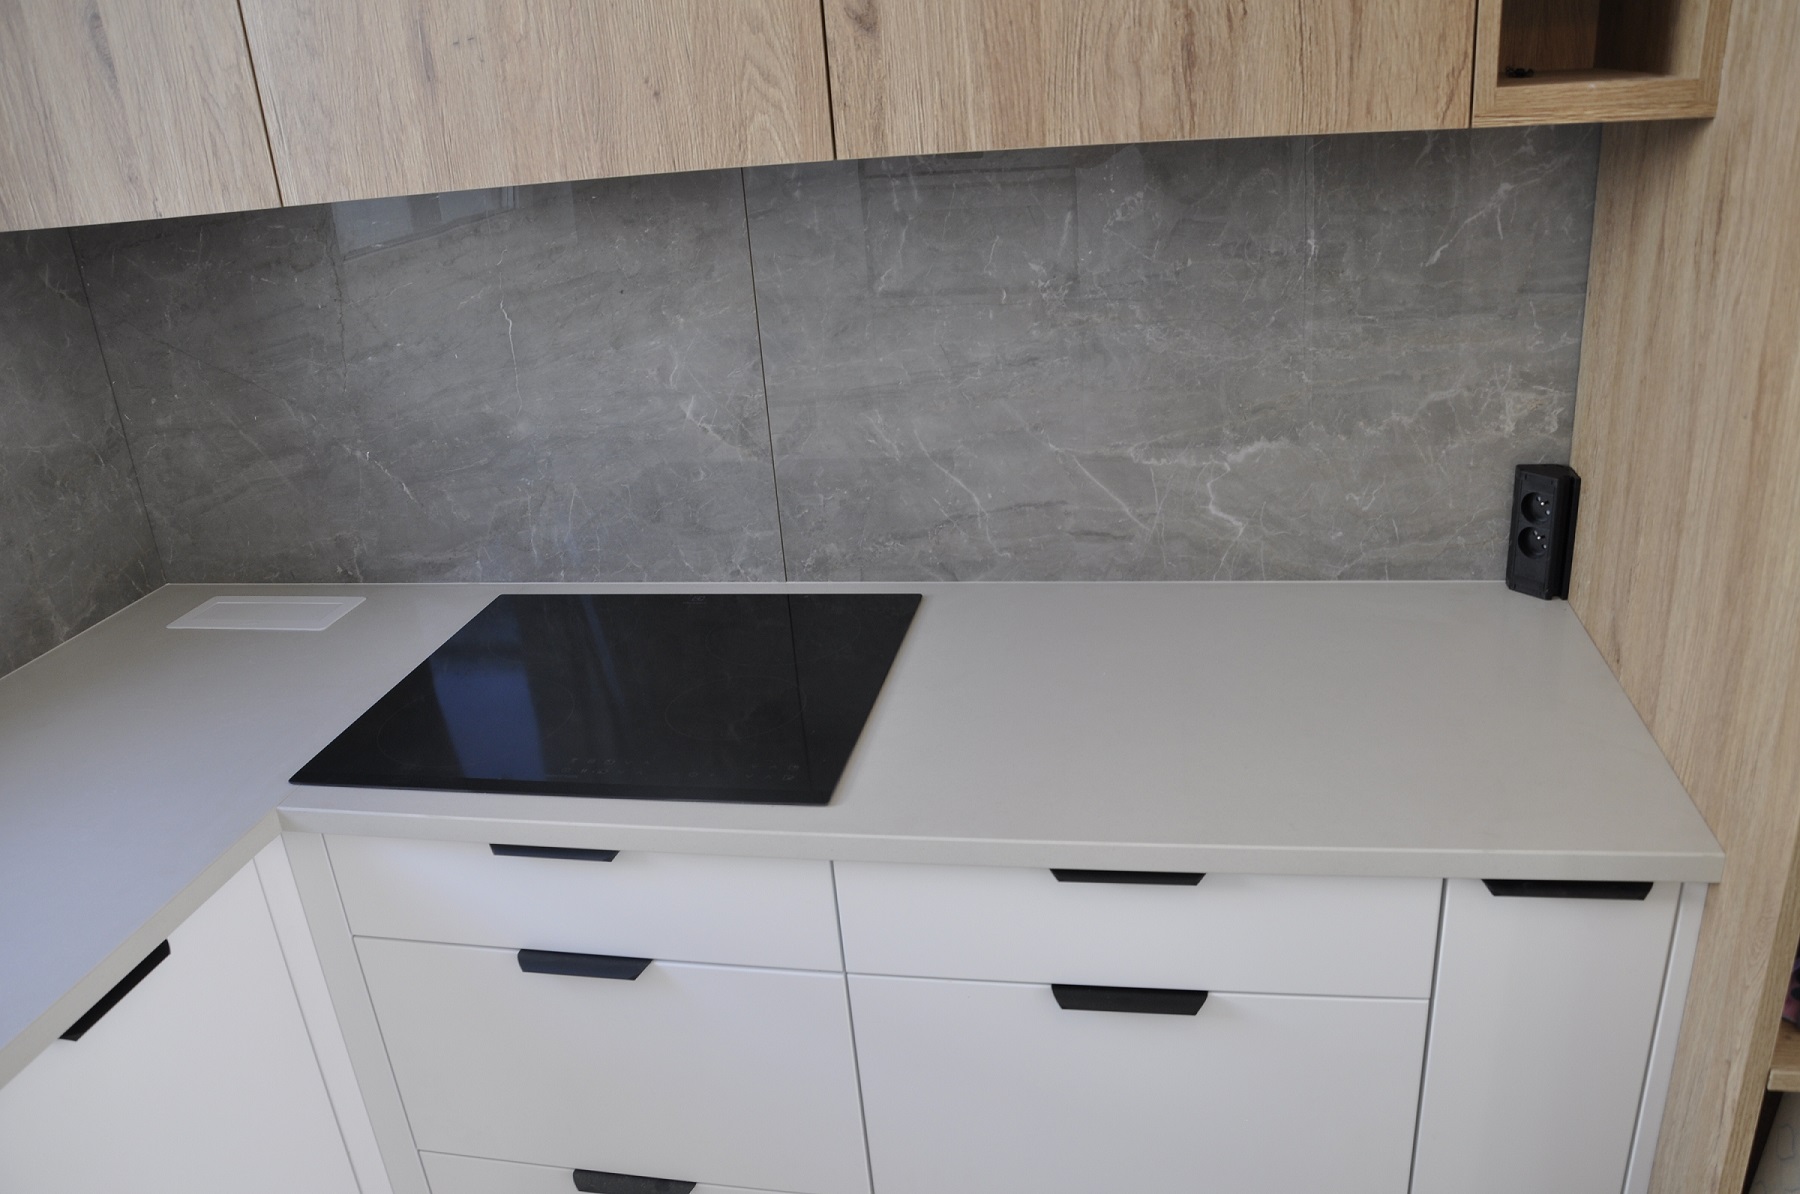 Konglomerat kwarcowy Fresh Concrete na blaty do kuchni PS Granit Gdynia